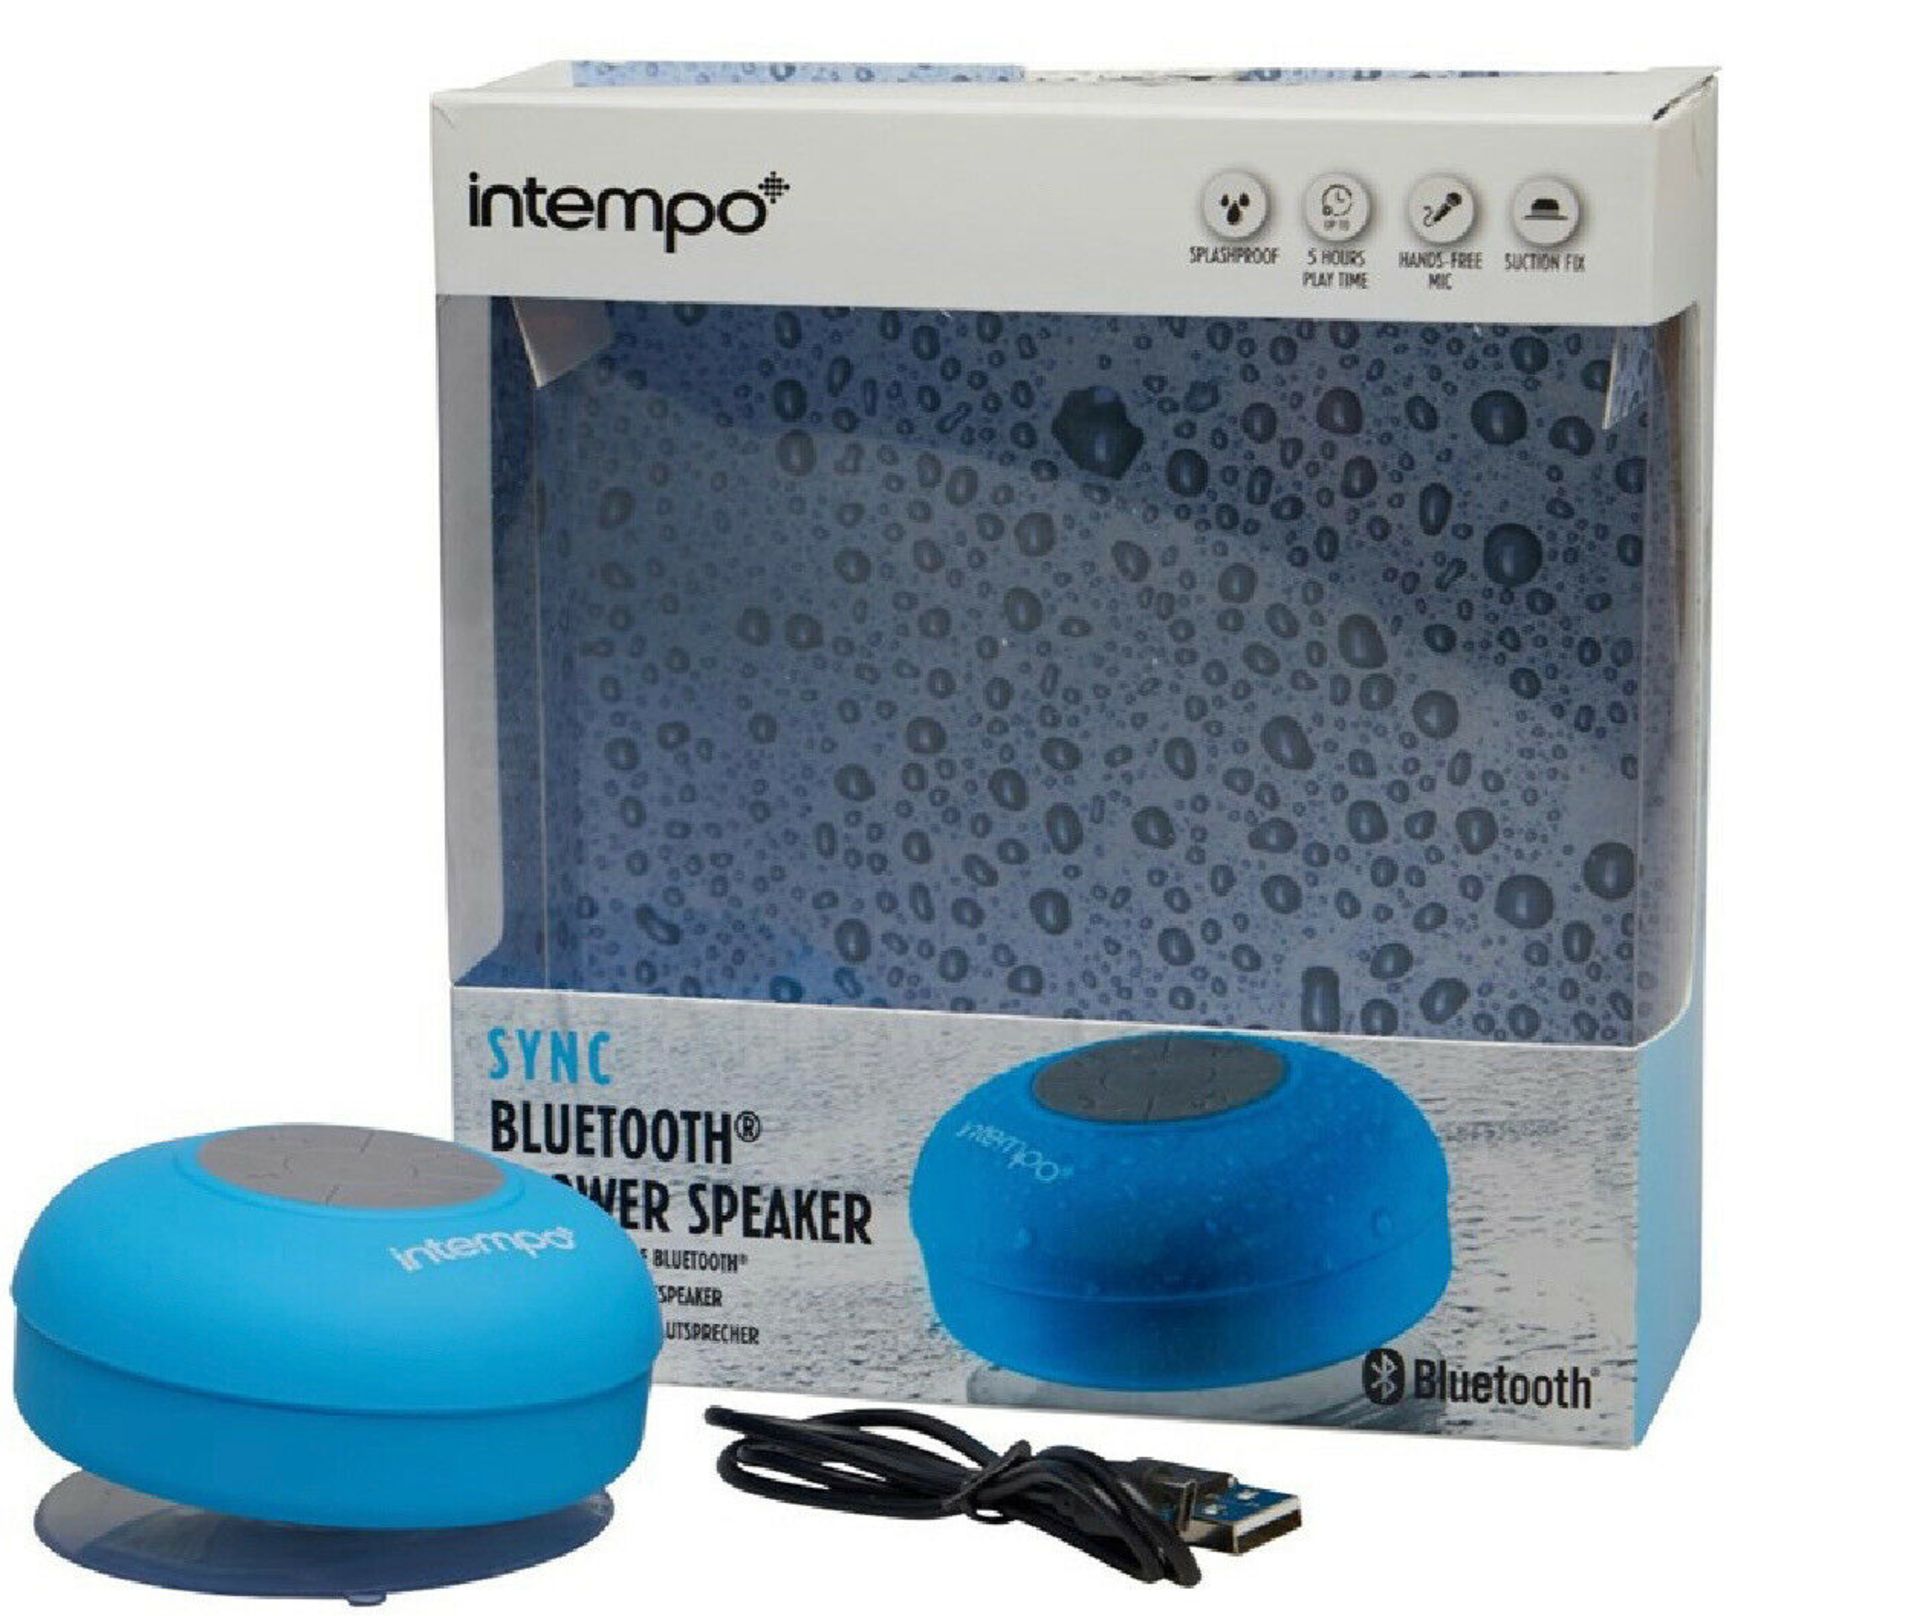 Brand New Intempo Blue Bluetooth Shower Speaker - RRP £9.99.